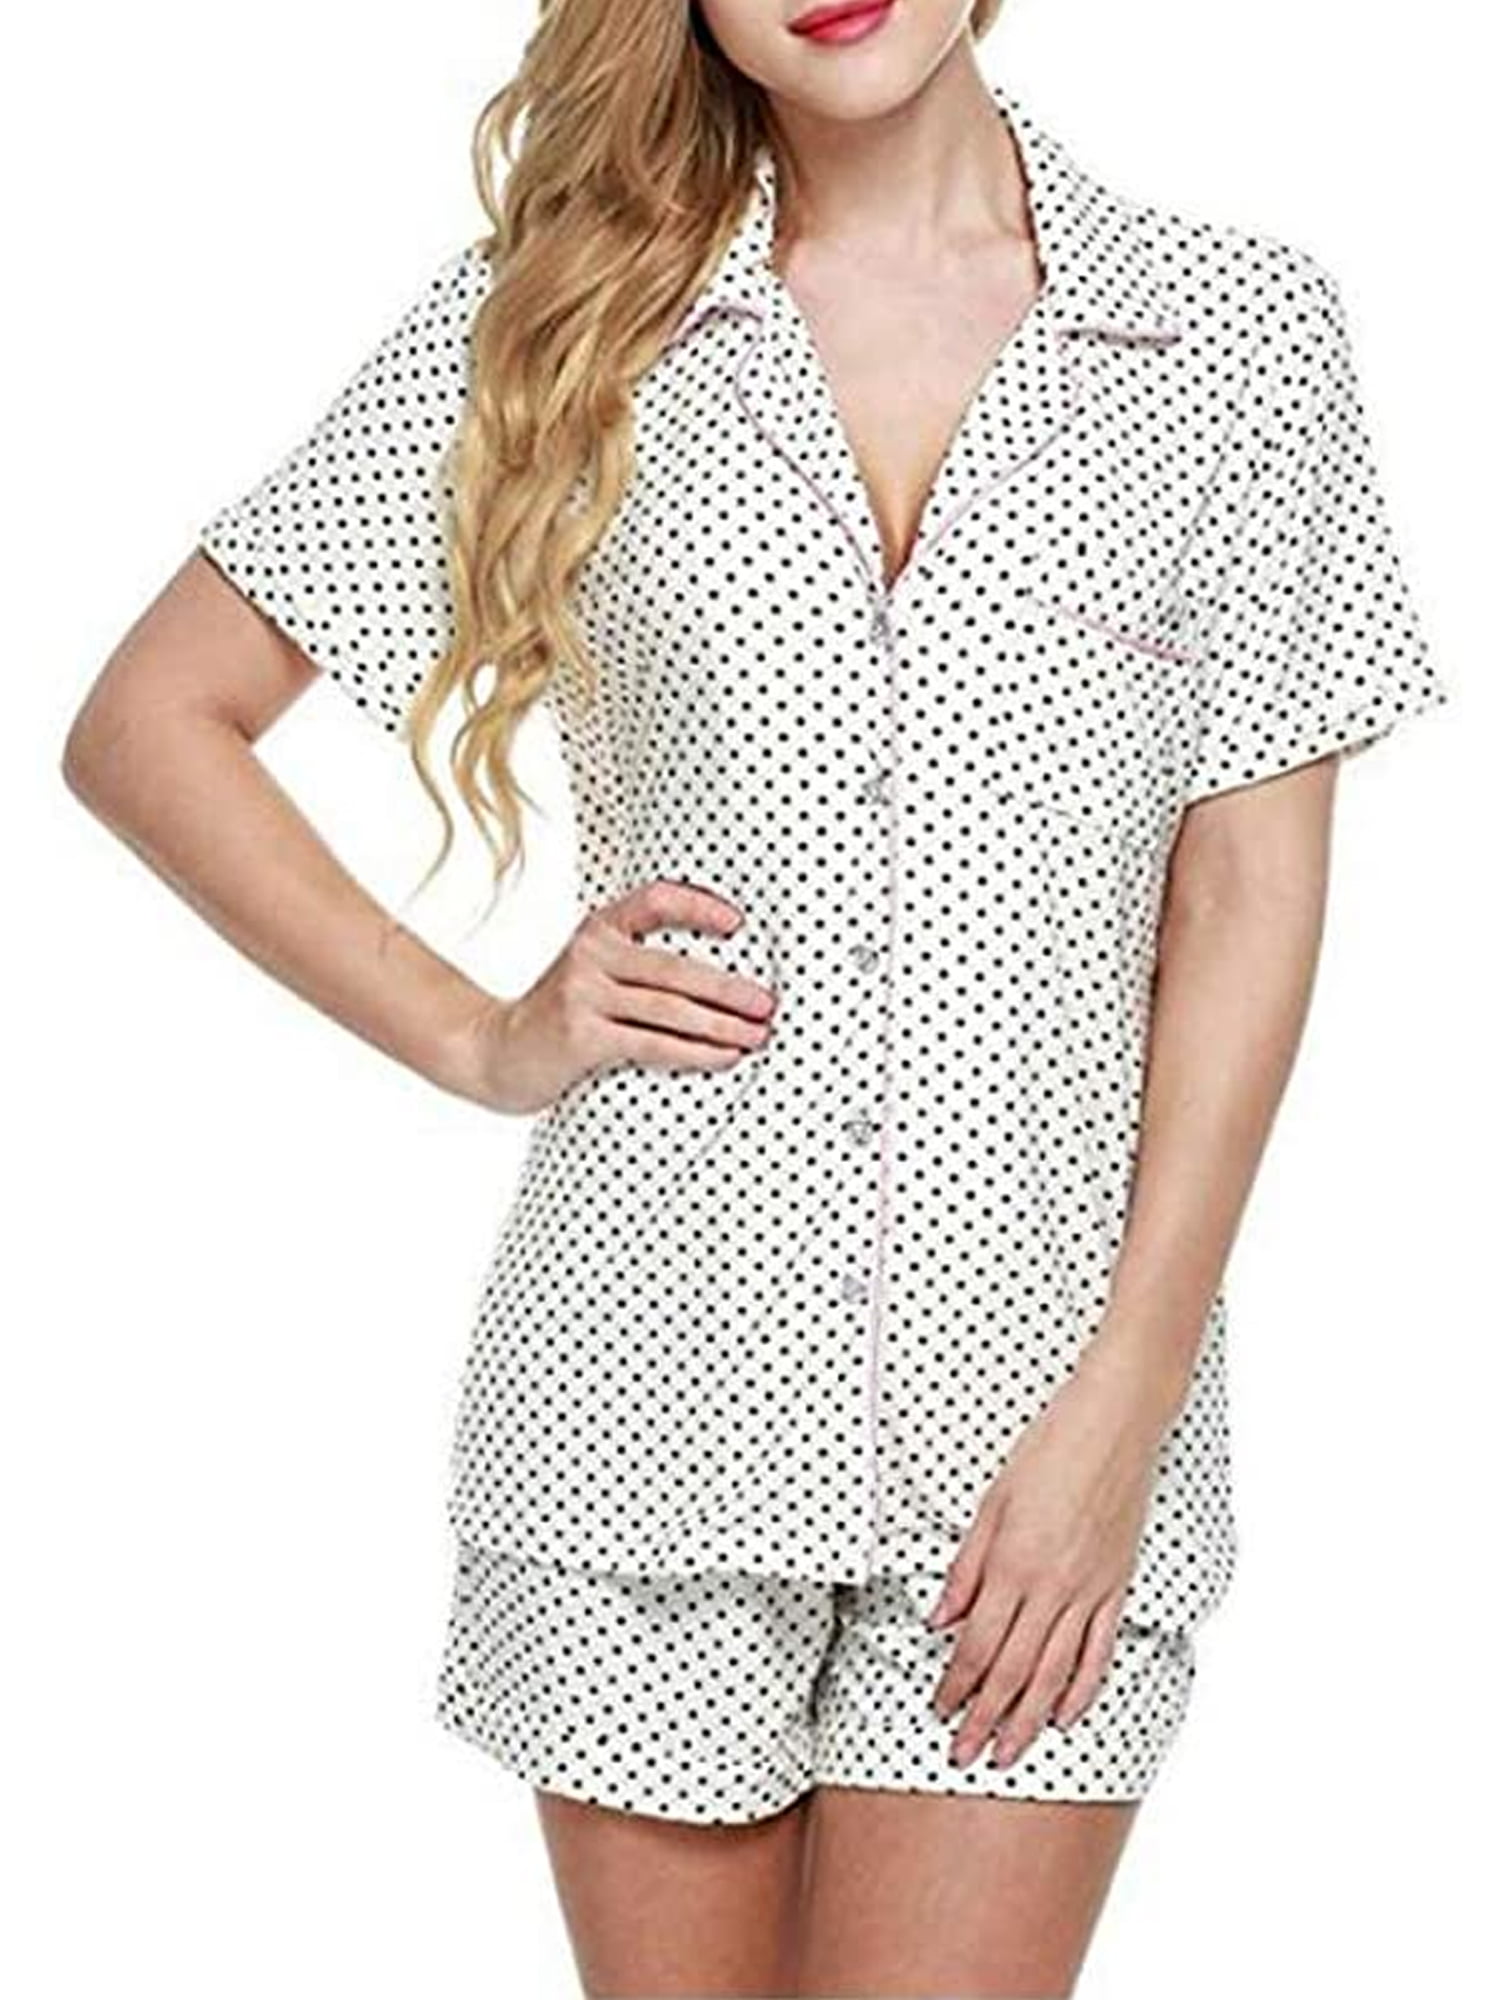 Mersariphy - MERSARIPHY Women Sleepwear Cute Cotton Short Sleeve Pajamas Set - Walmart.com ...